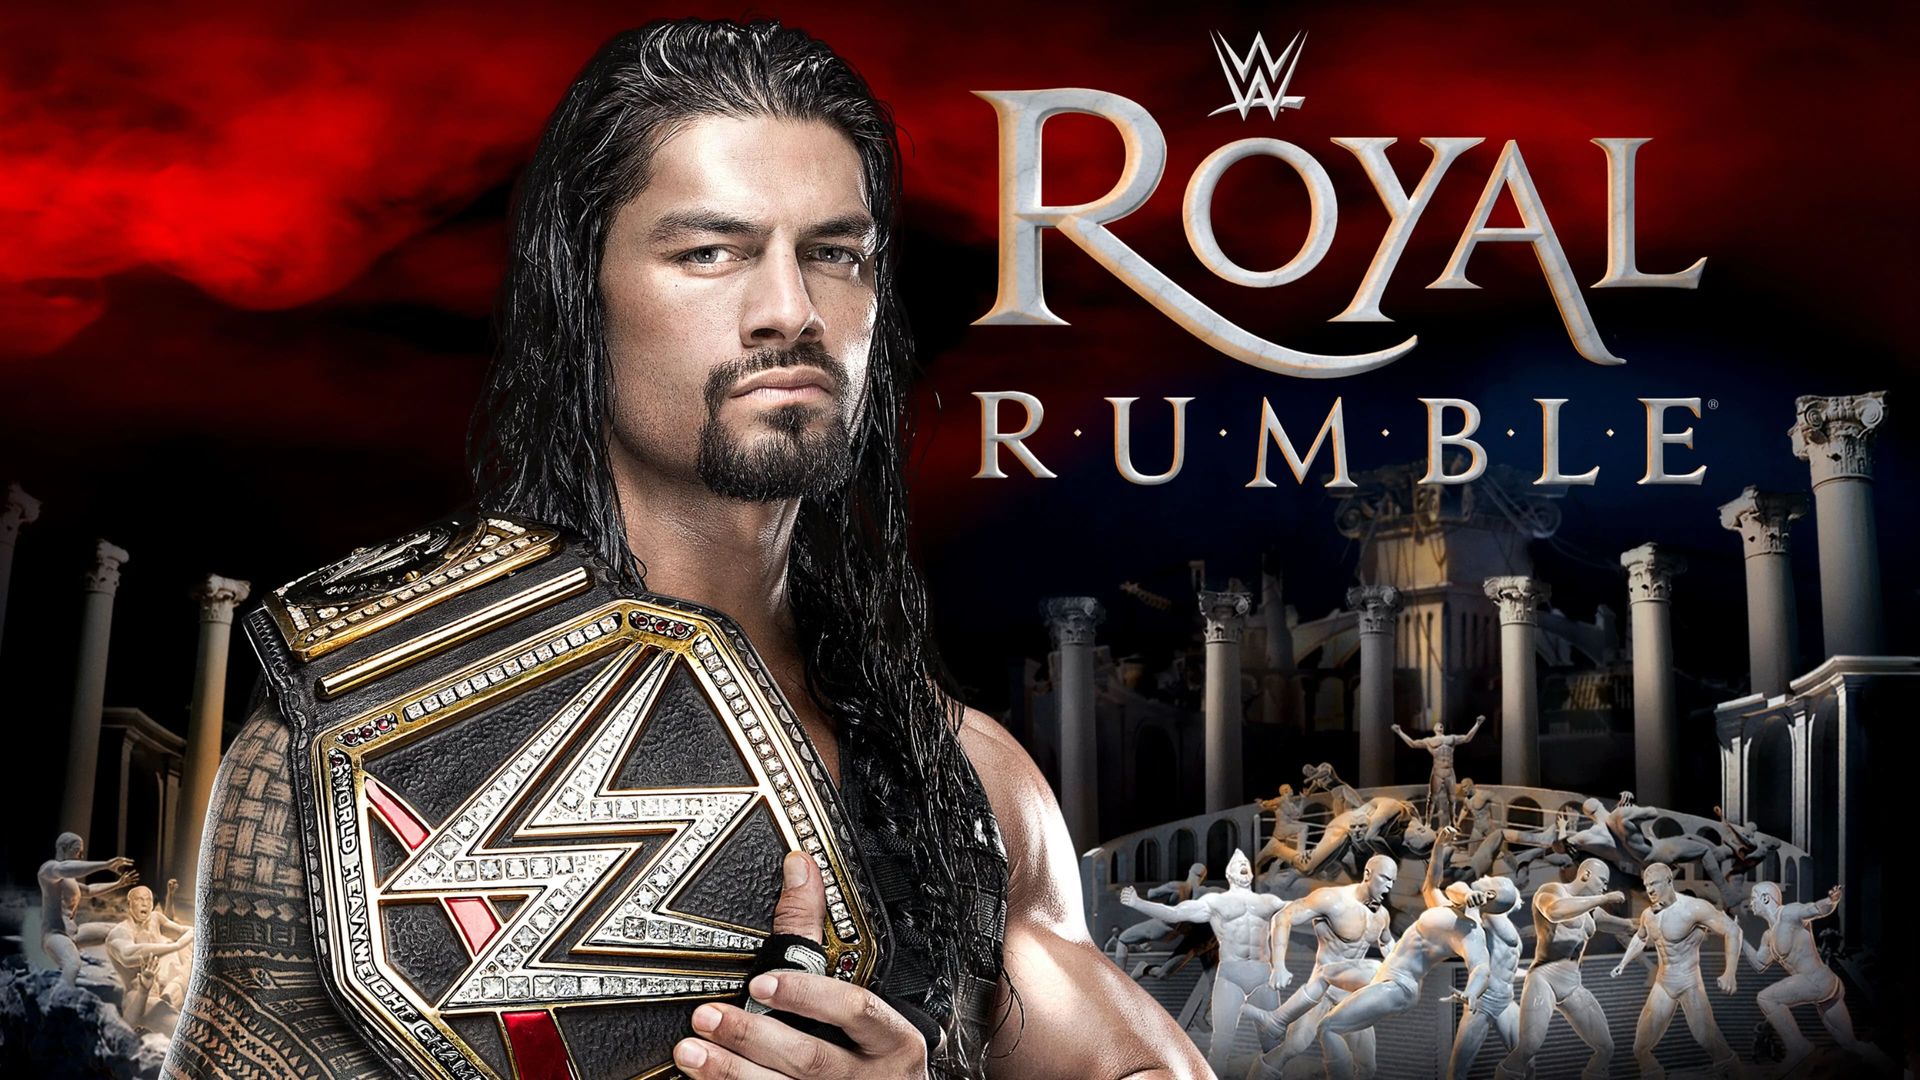 WWE Royal Rumble 2016 Backdrop